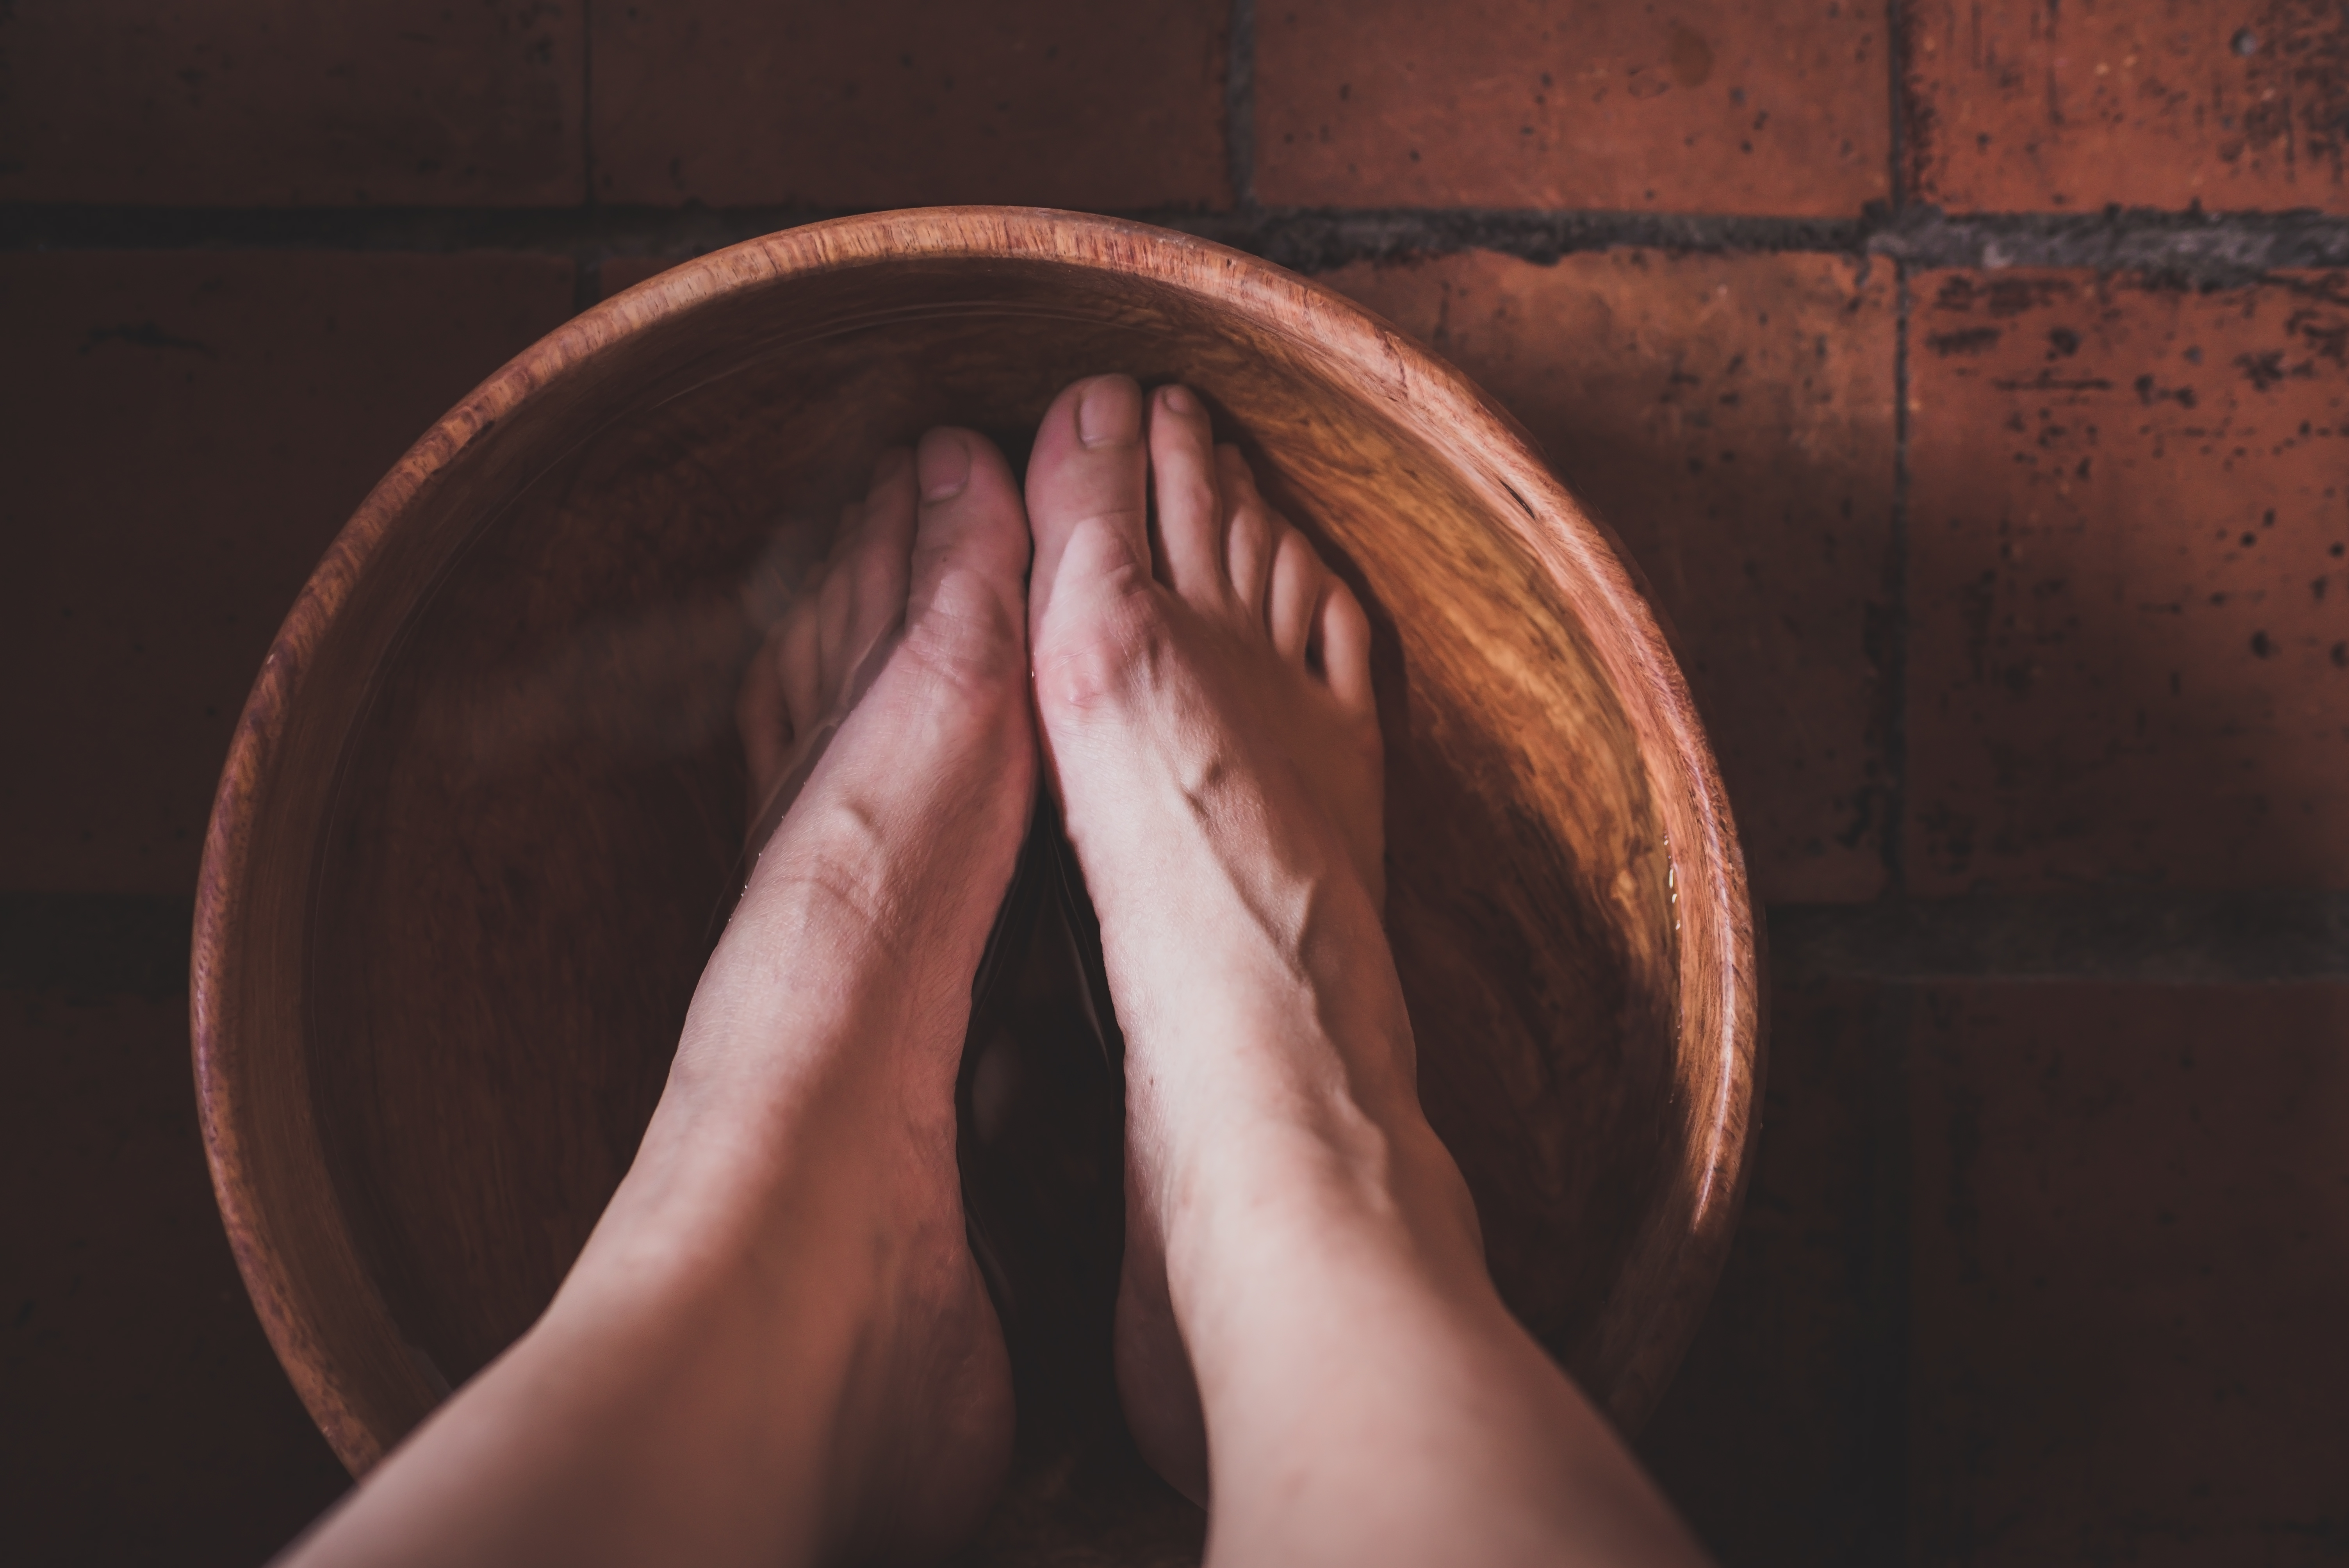 foot bath in a wooden bowl preparing for reflexology